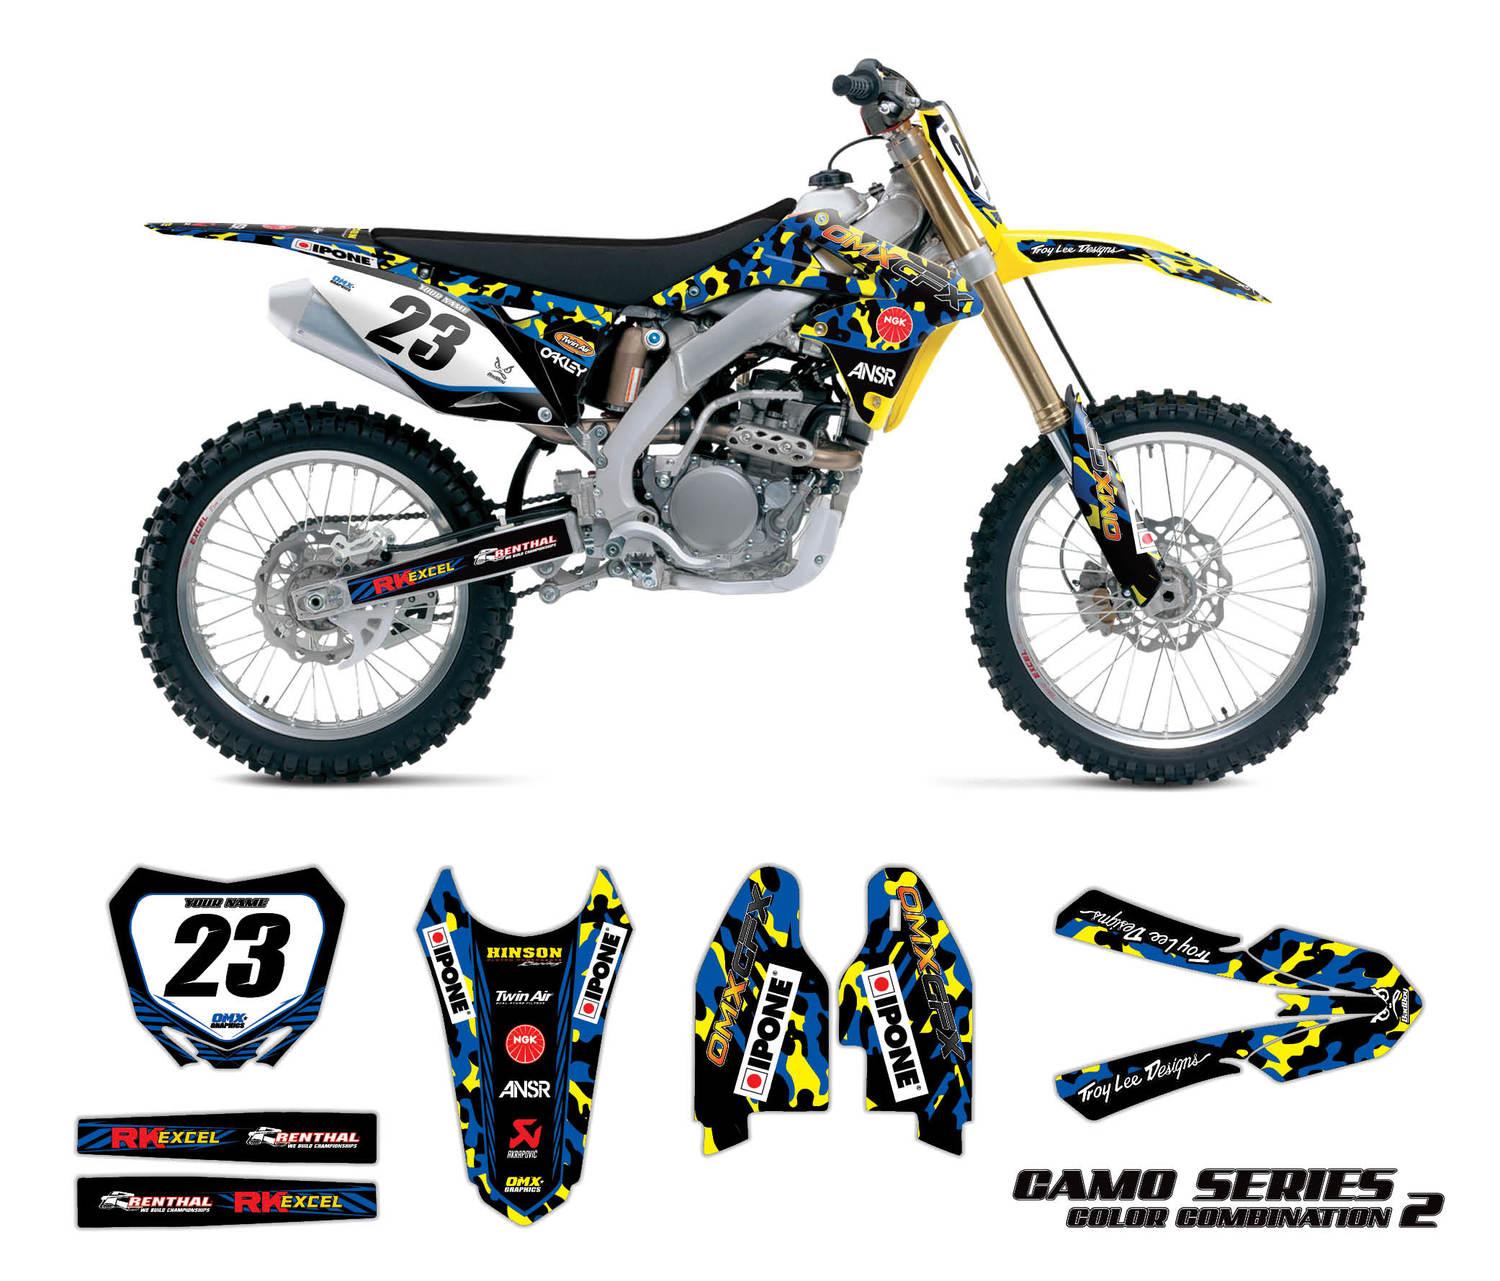 Lot Set of 10 Suzuki Style Stickers Racing Motorcycle Motocross RMZ Dirtbike 